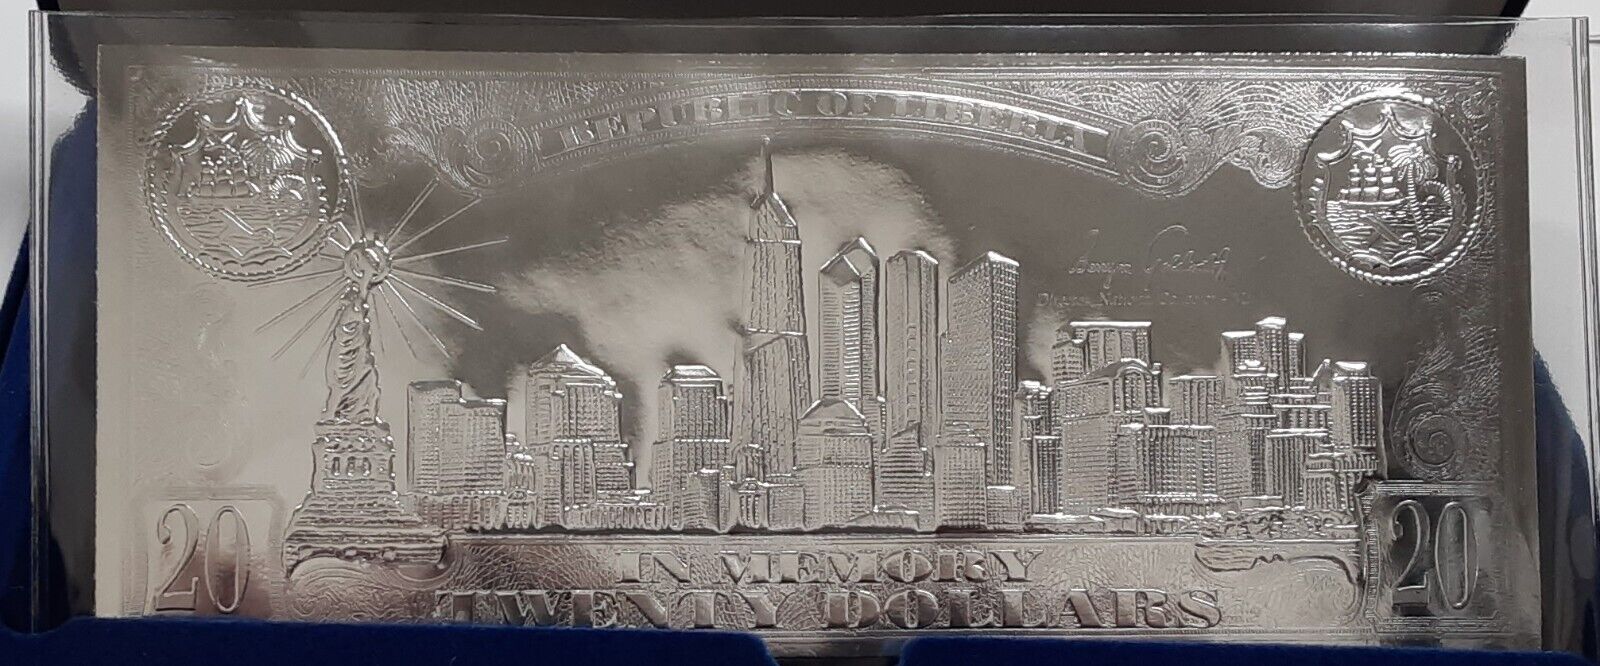 Republic of Liberia 9-11 Commemorative Silver Plated Note in Plastic Sleeve